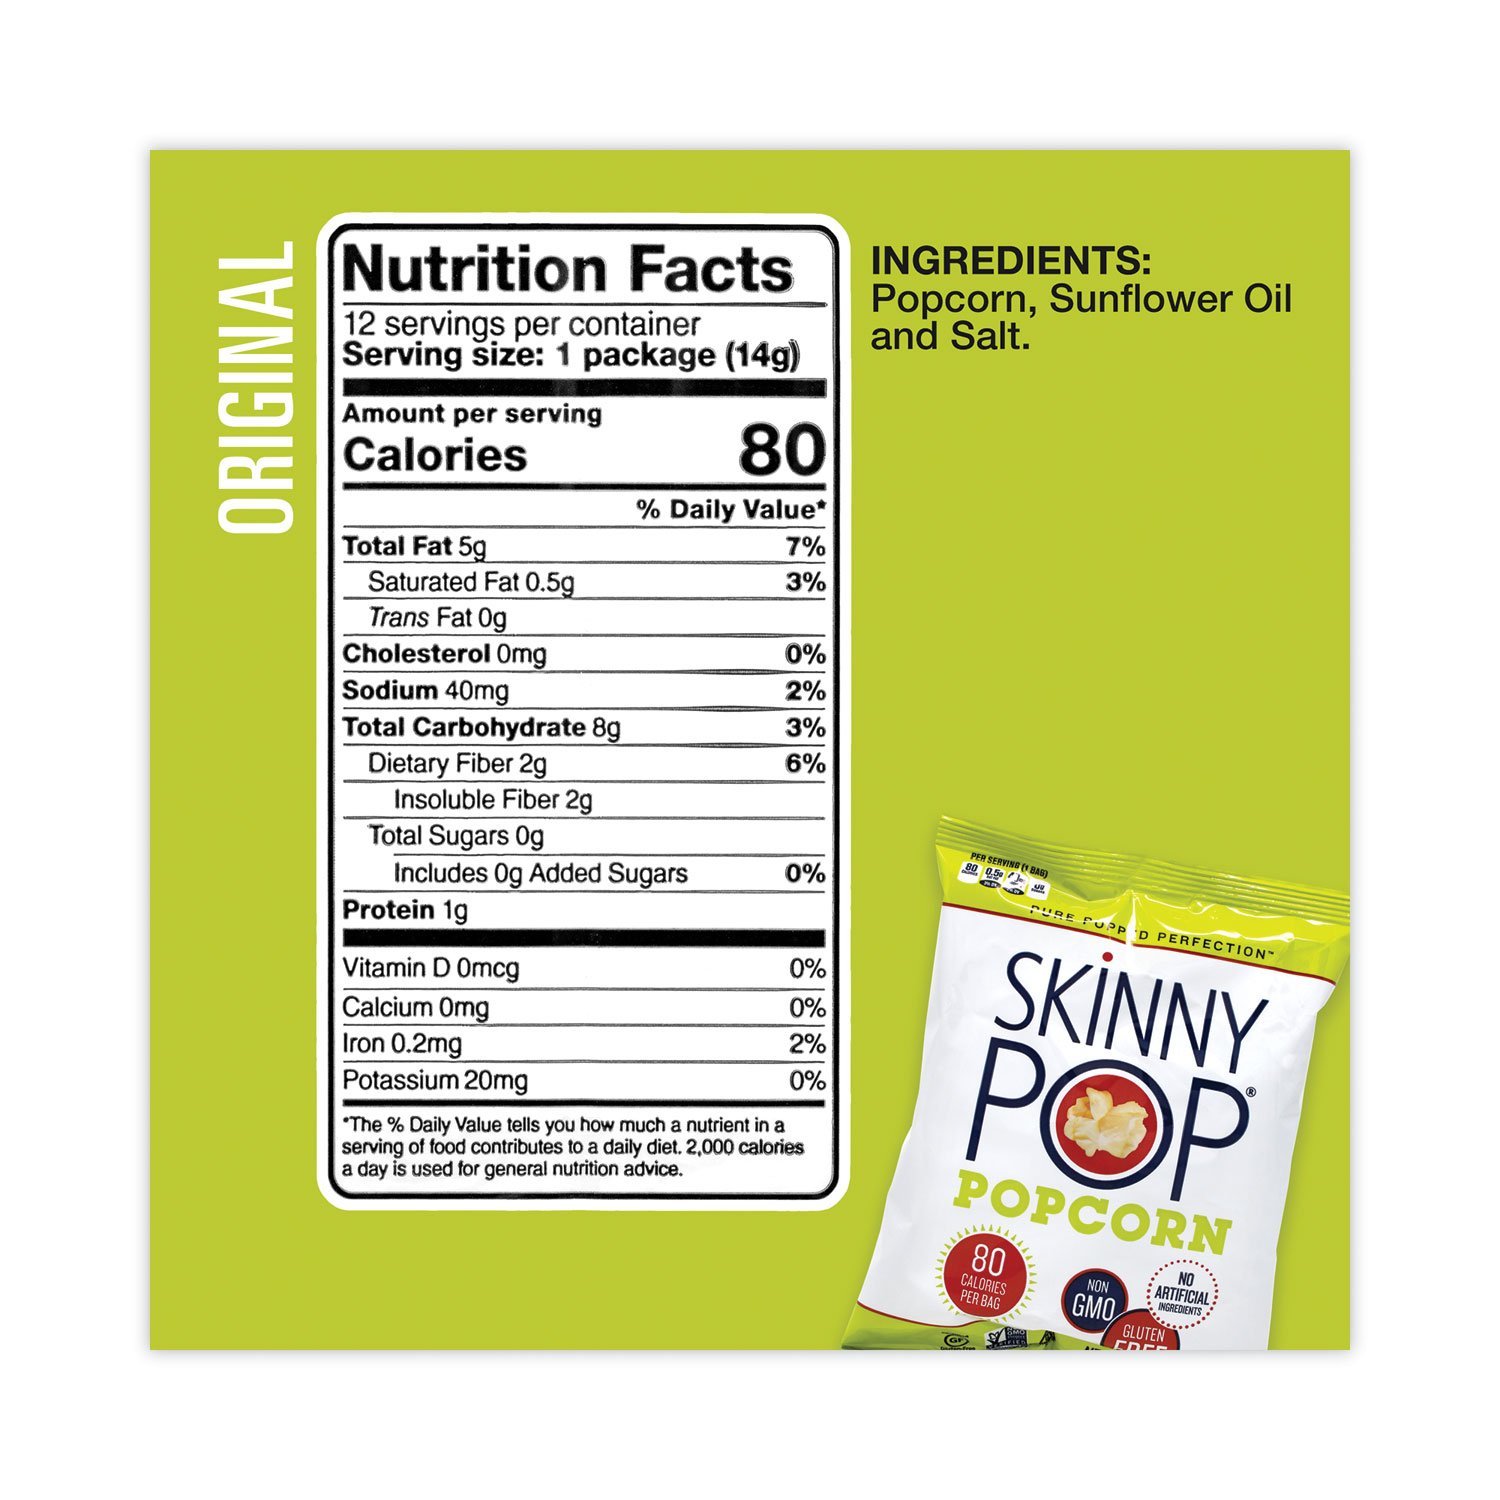 Skinny Pop Variety Snack Pack - Office Depot